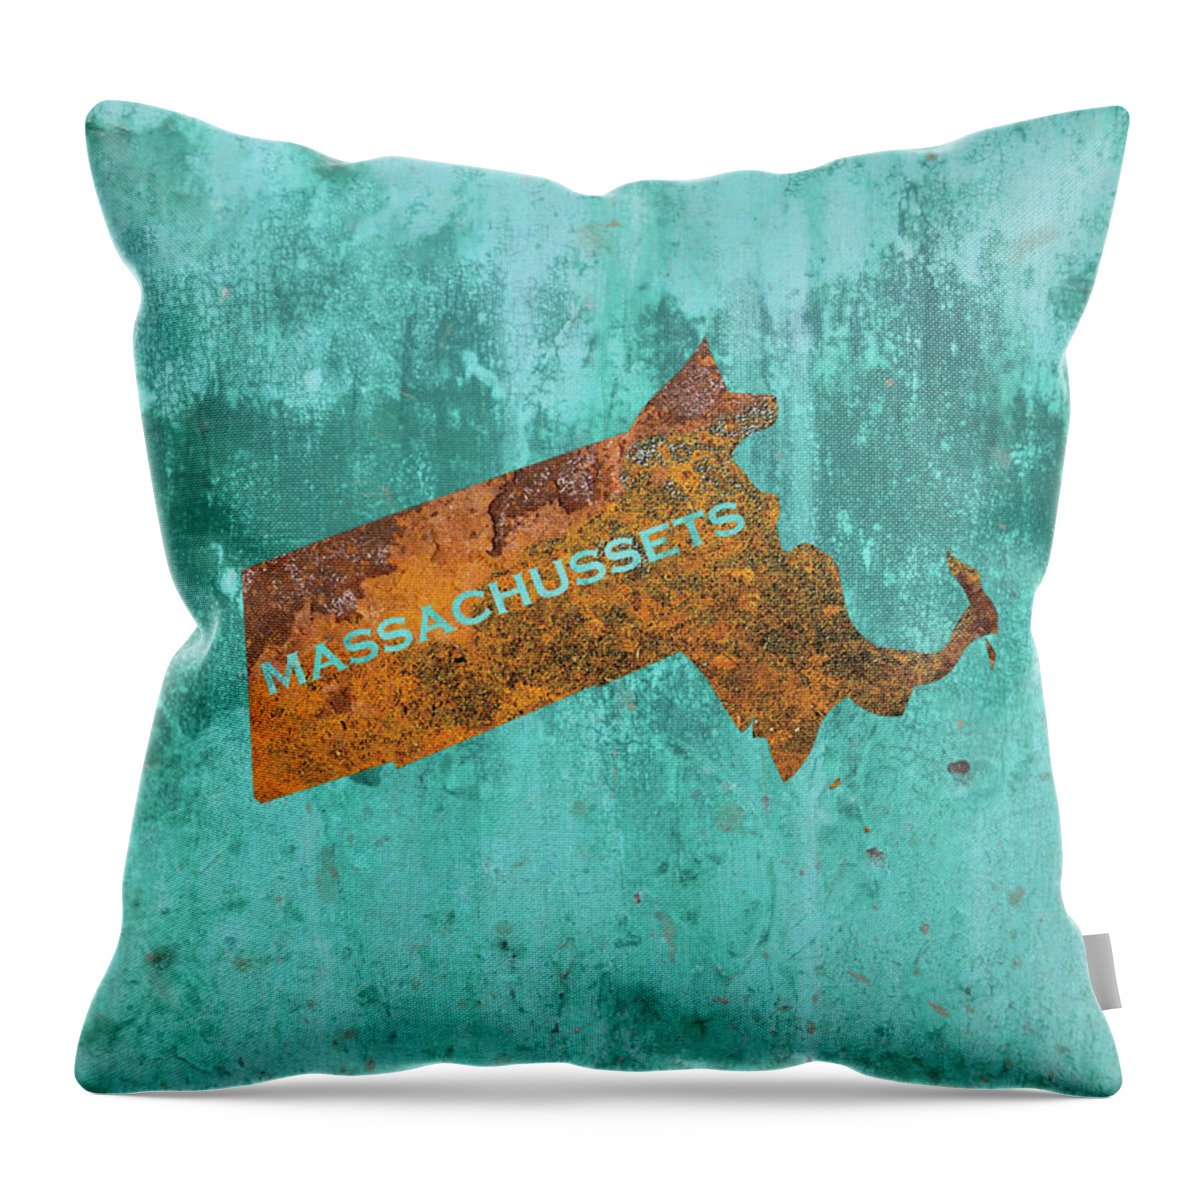 Massachusetts Throw Pillow featuring the mixed media Massachusetts Rust on Teal by Elisabeth Lucas